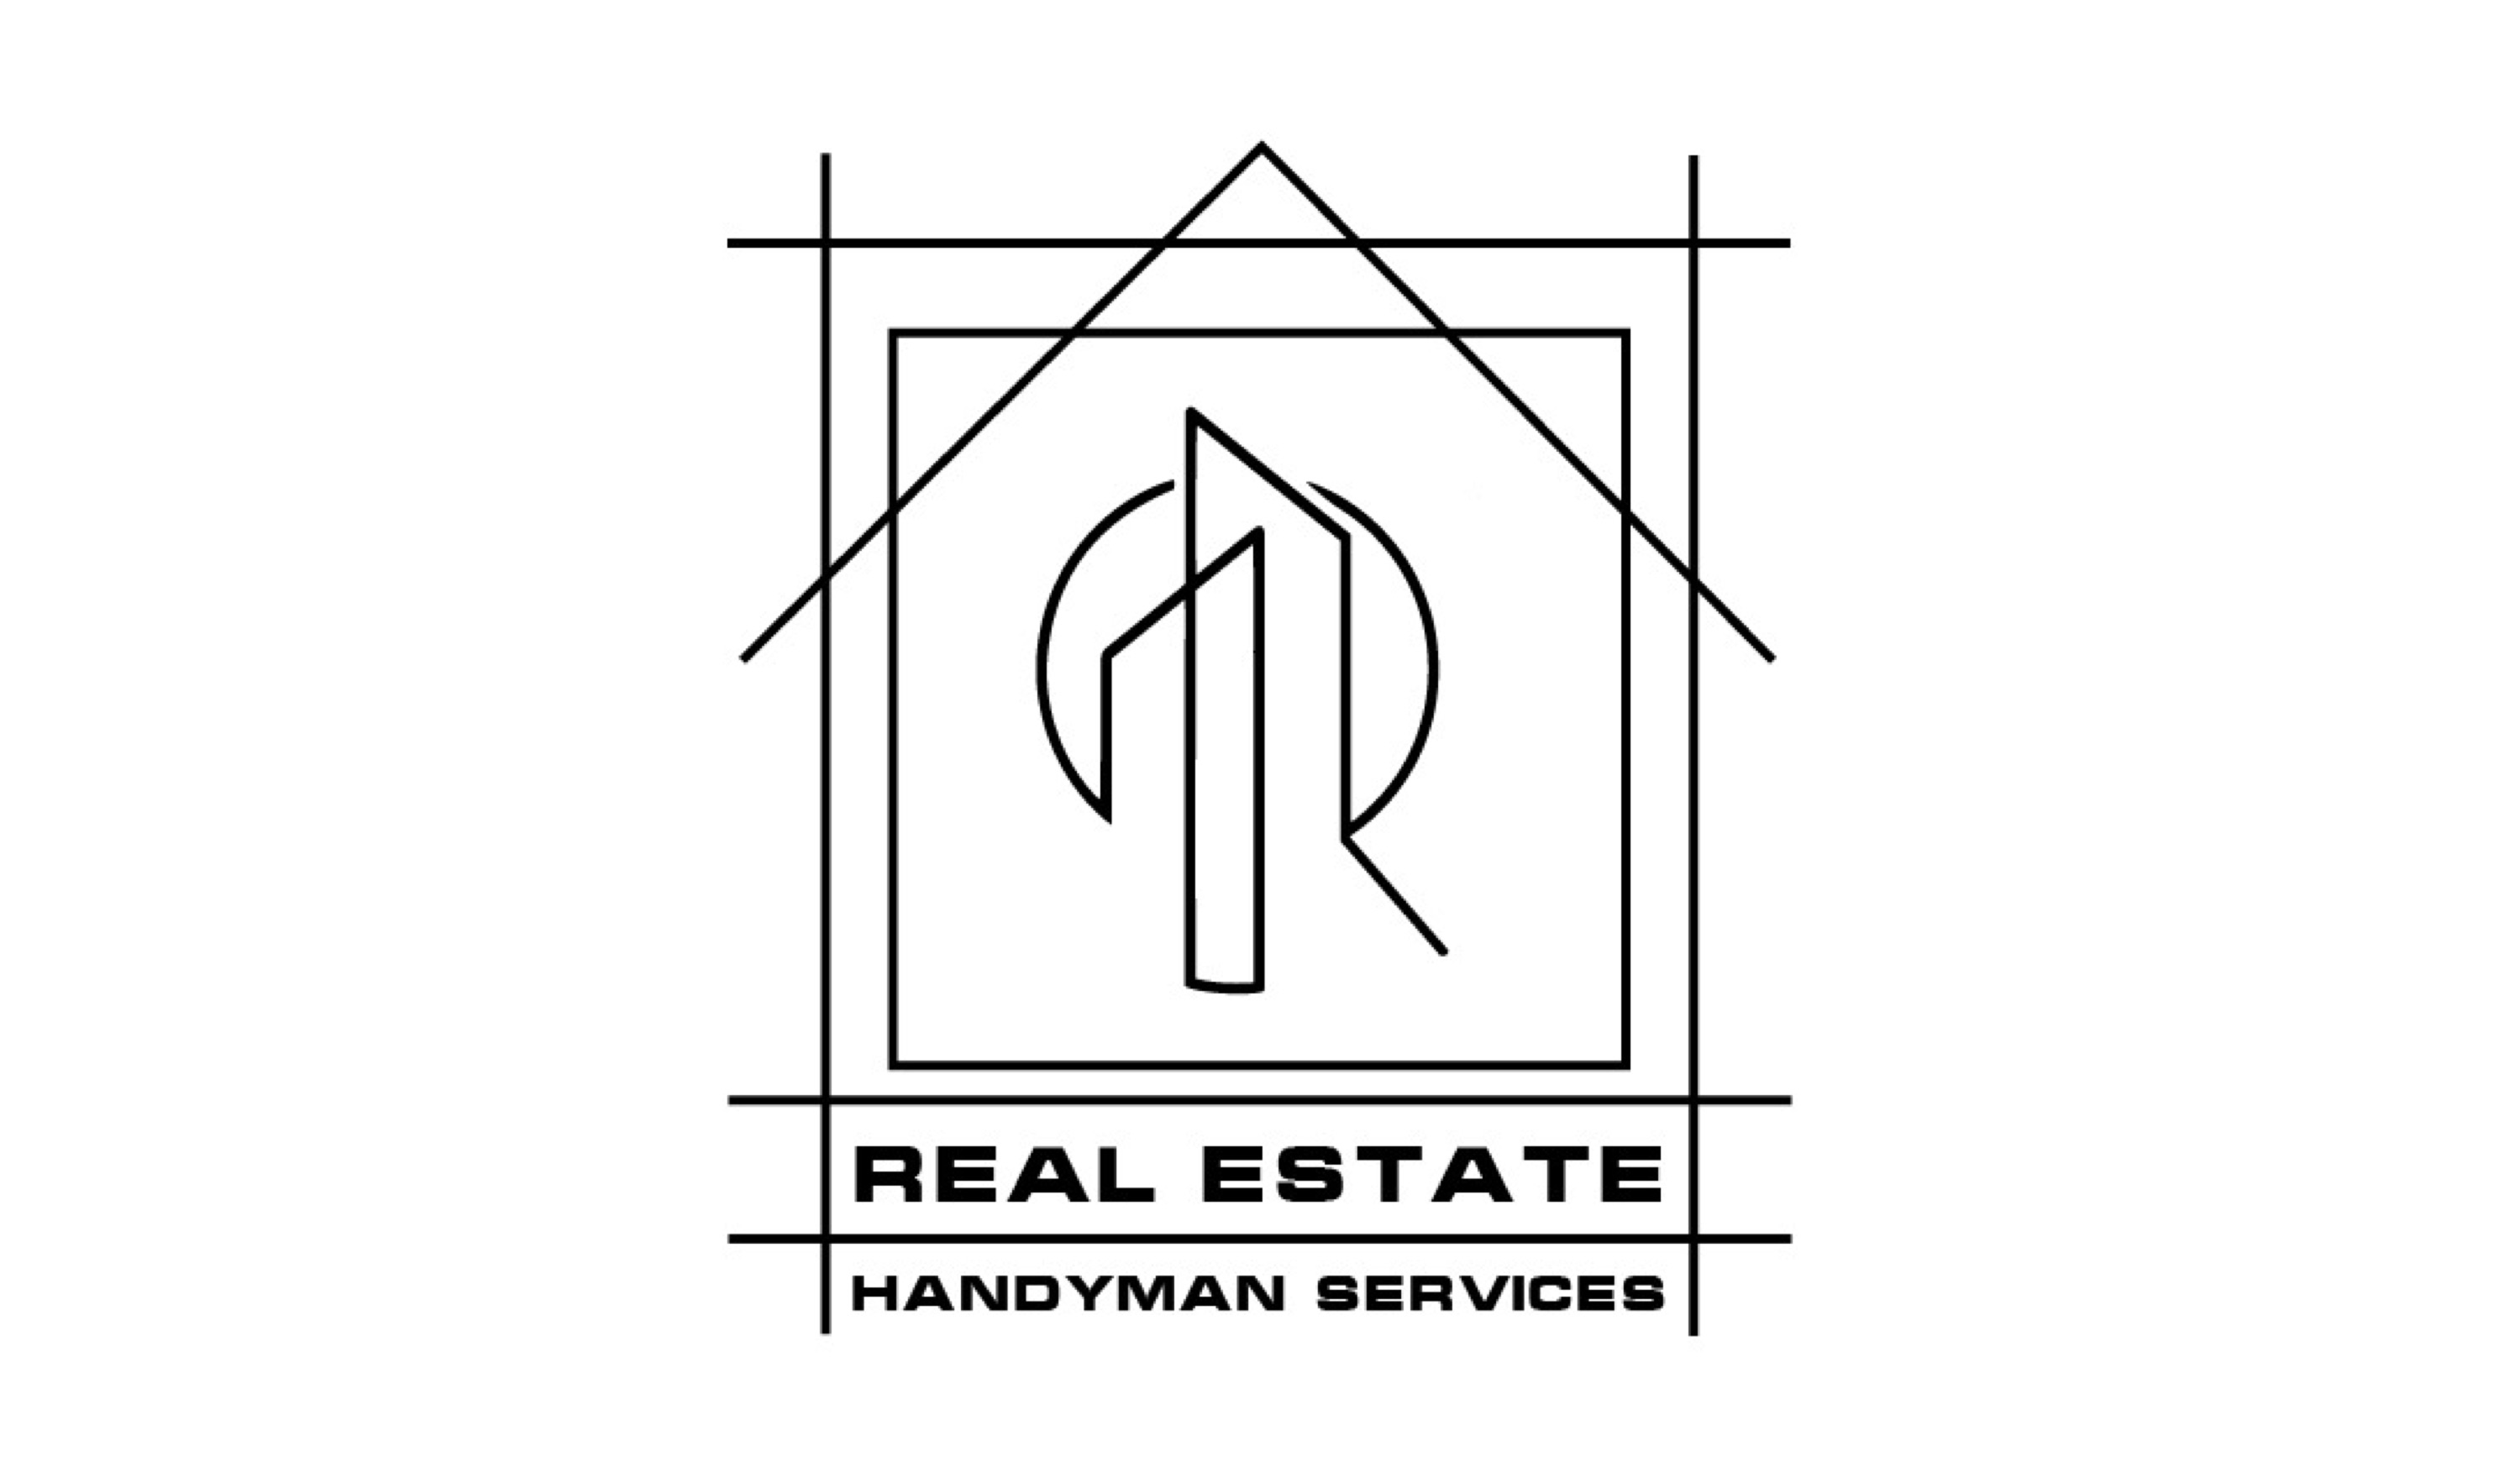 Real Estate Handyman Services Logo